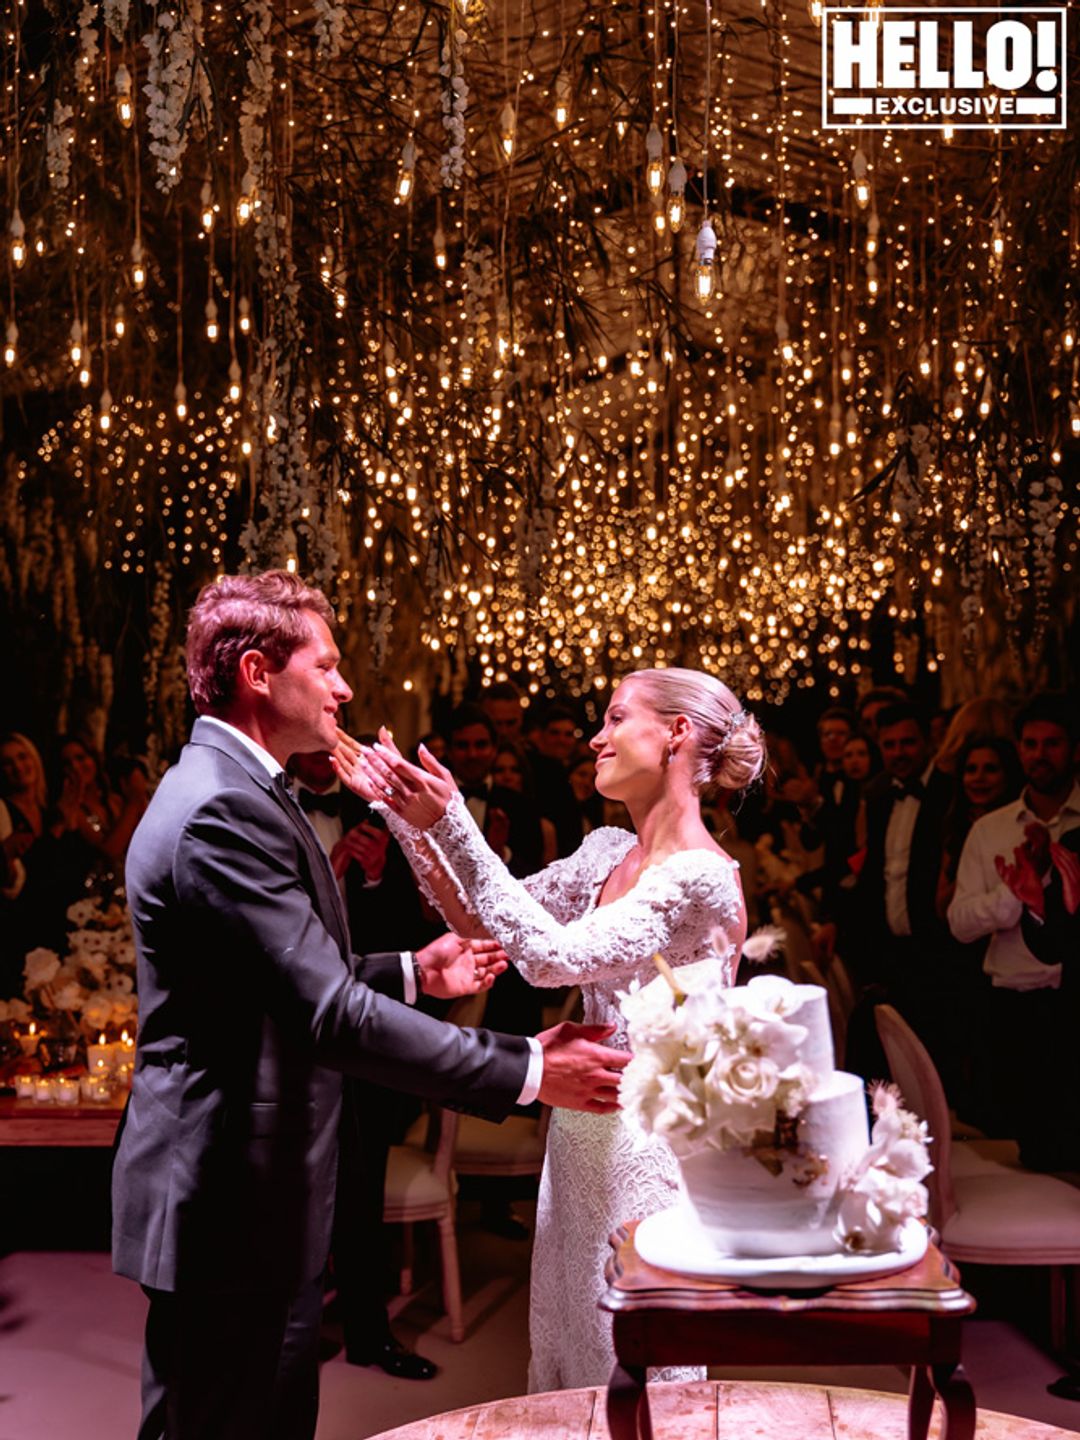 Amelia Spencer hugging Greg Mallett in front of their wedding cake